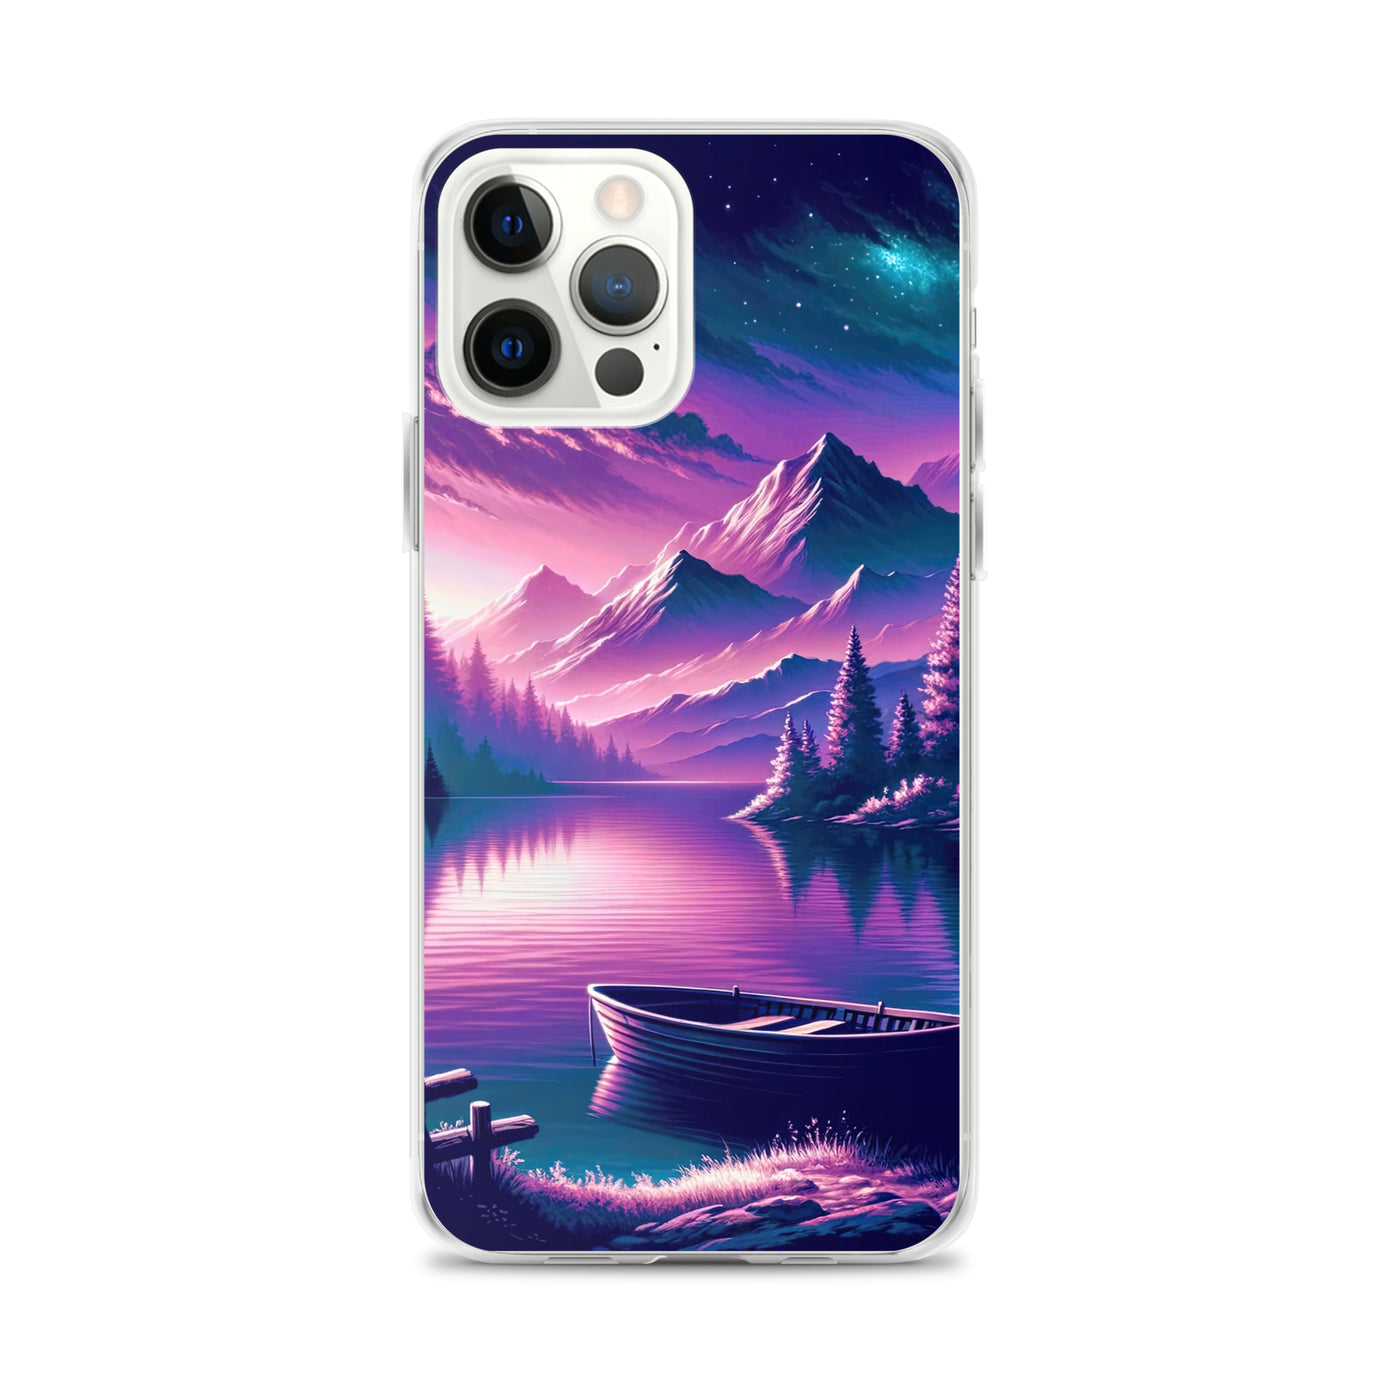 Magische Alpen-Dämmerung, rosa-lila Himmel und Bergsee mit Boot - iPhone Schutzhülle (durchsichtig) berge xxx yyy zzz iPhone 12 Pro Max